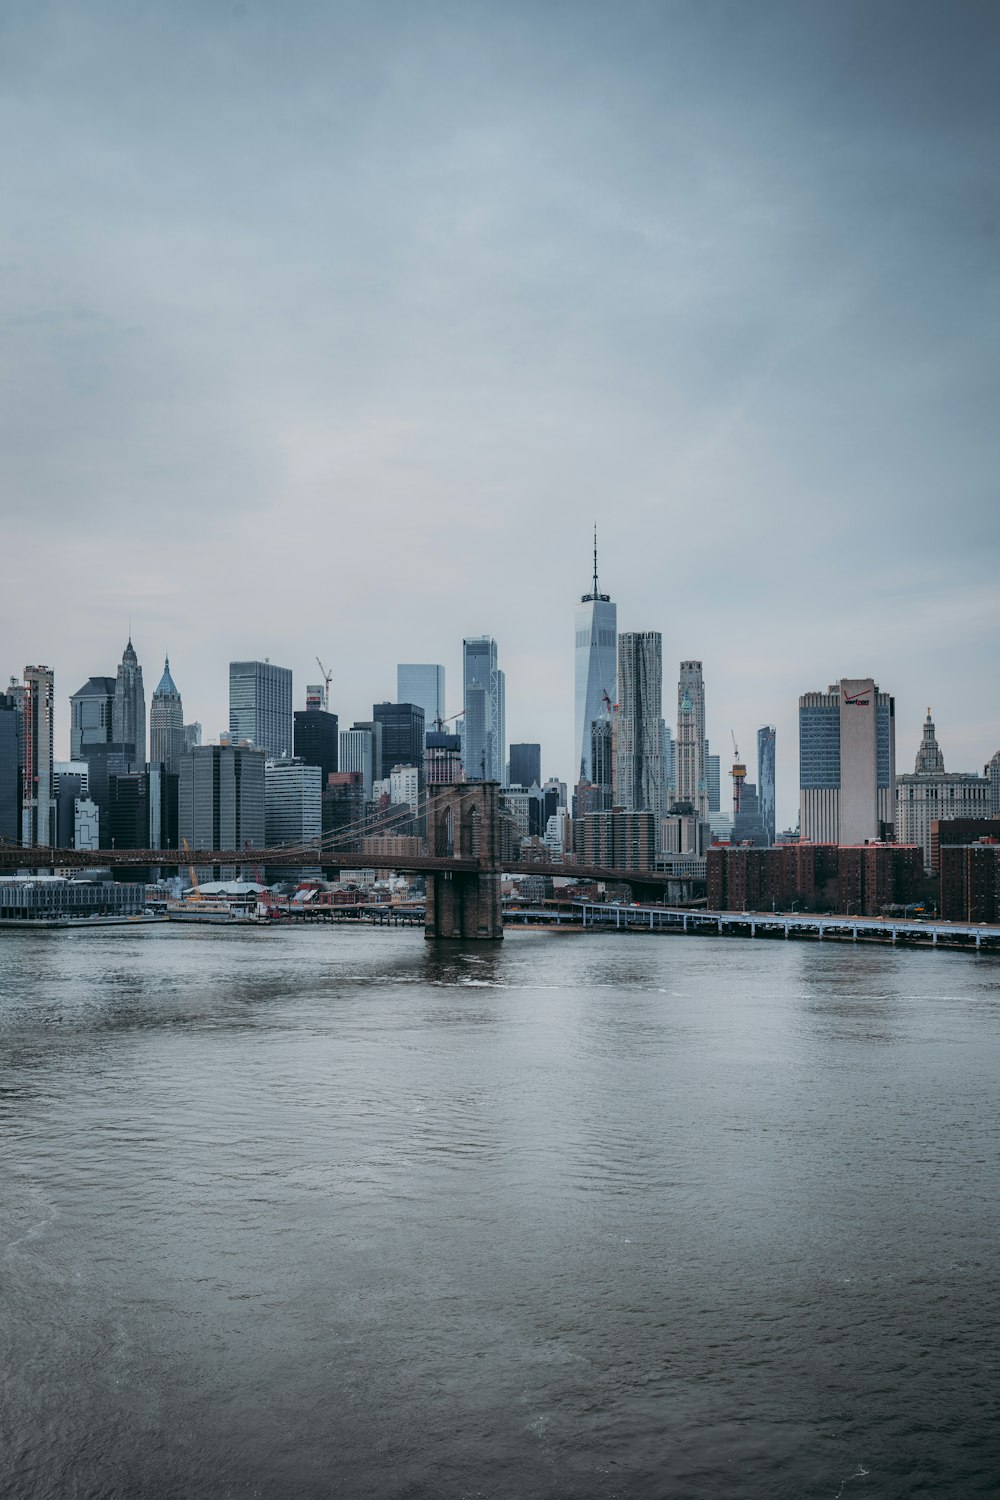 New York City skyline during daytime